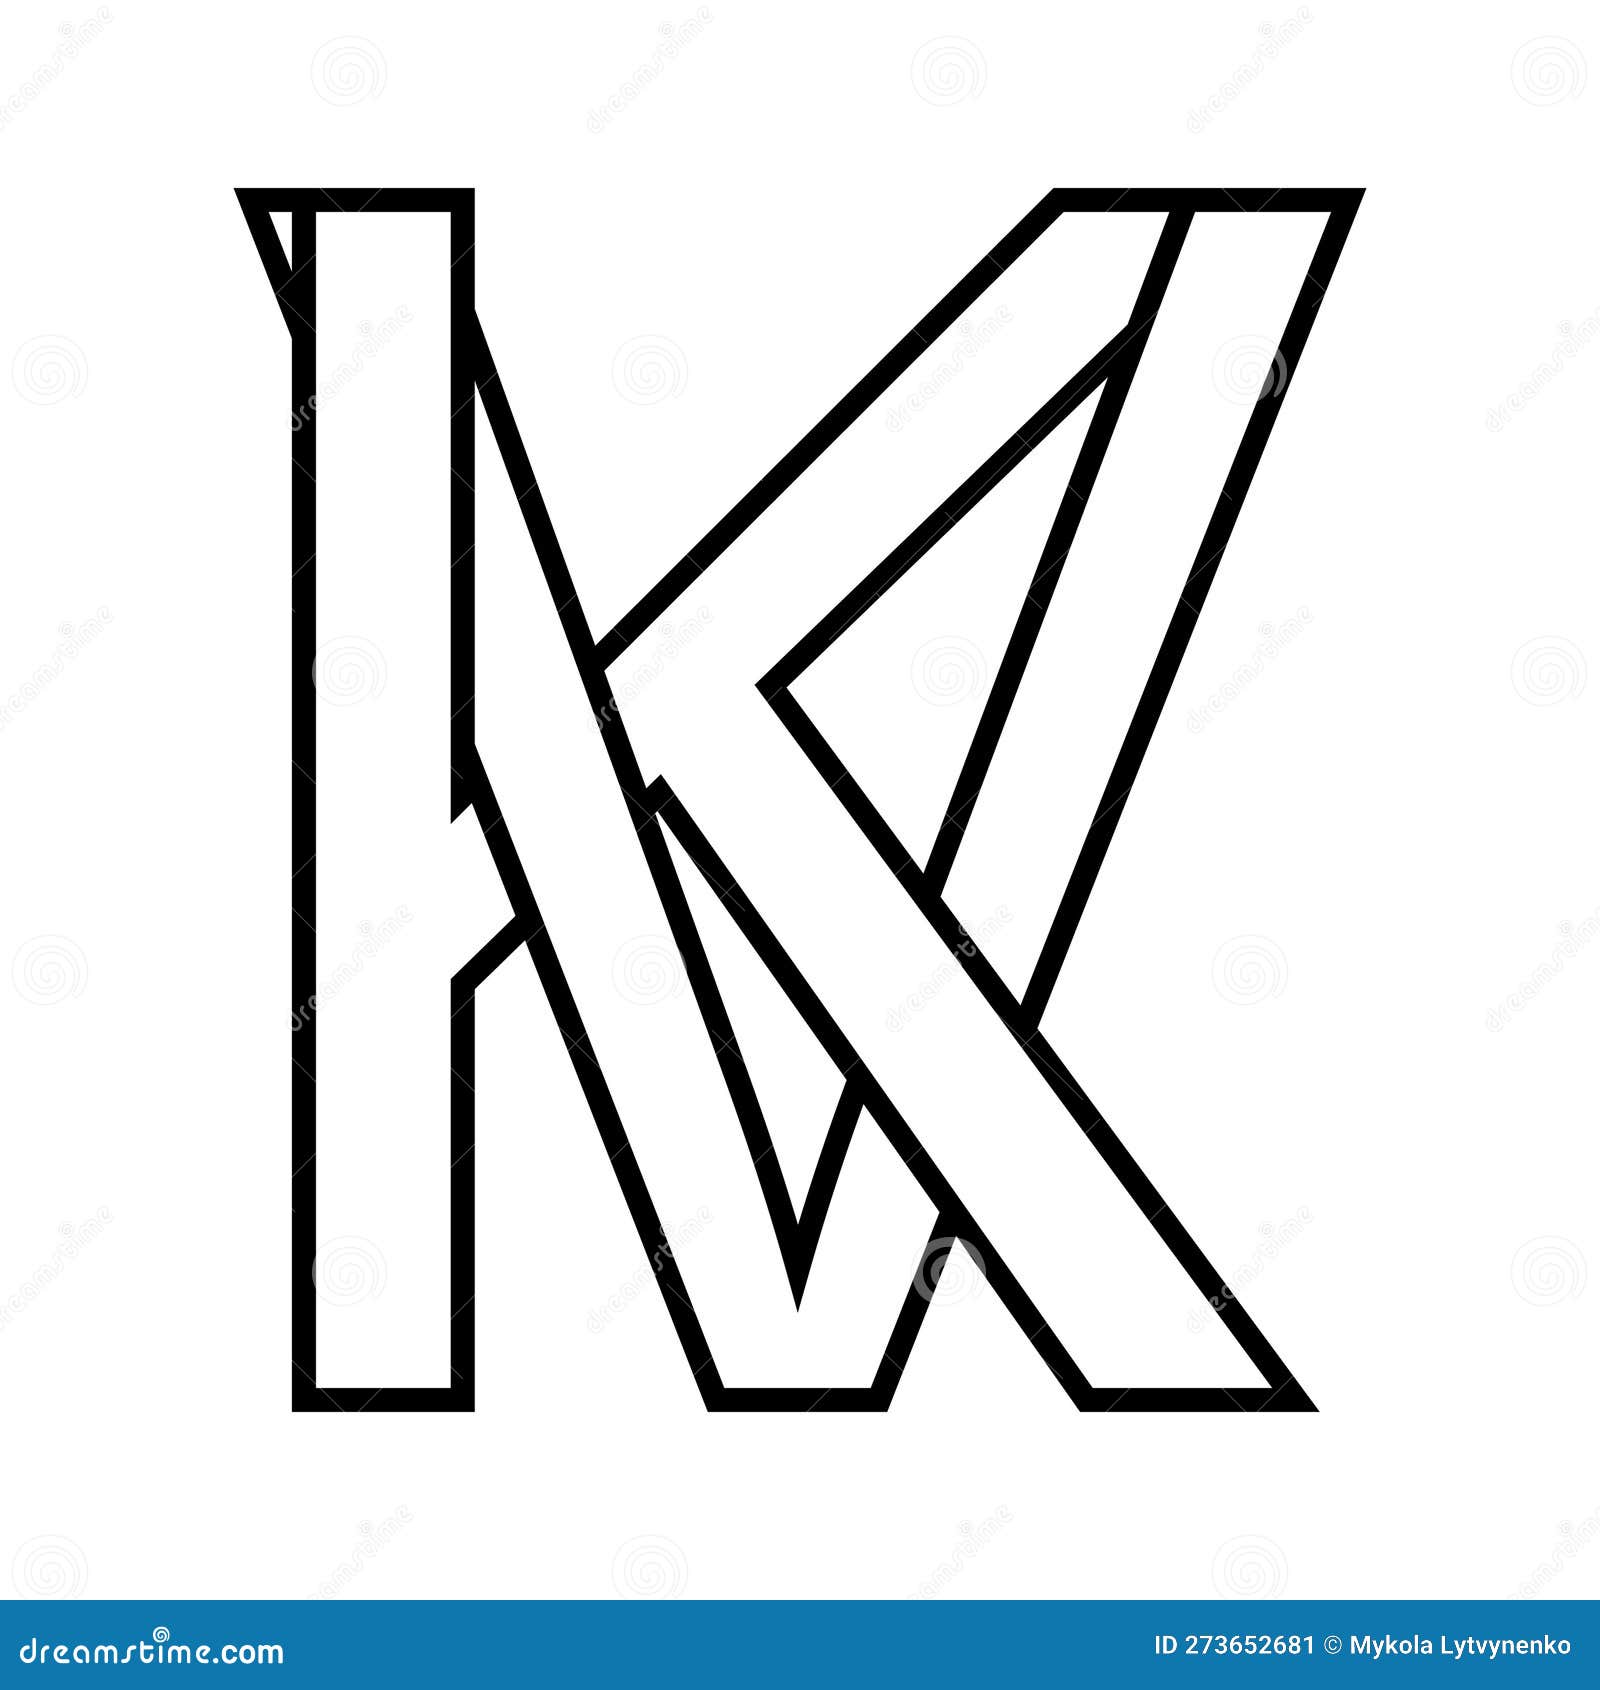 Vk Logo Design Vector Template: vetor stock (livre de direitos